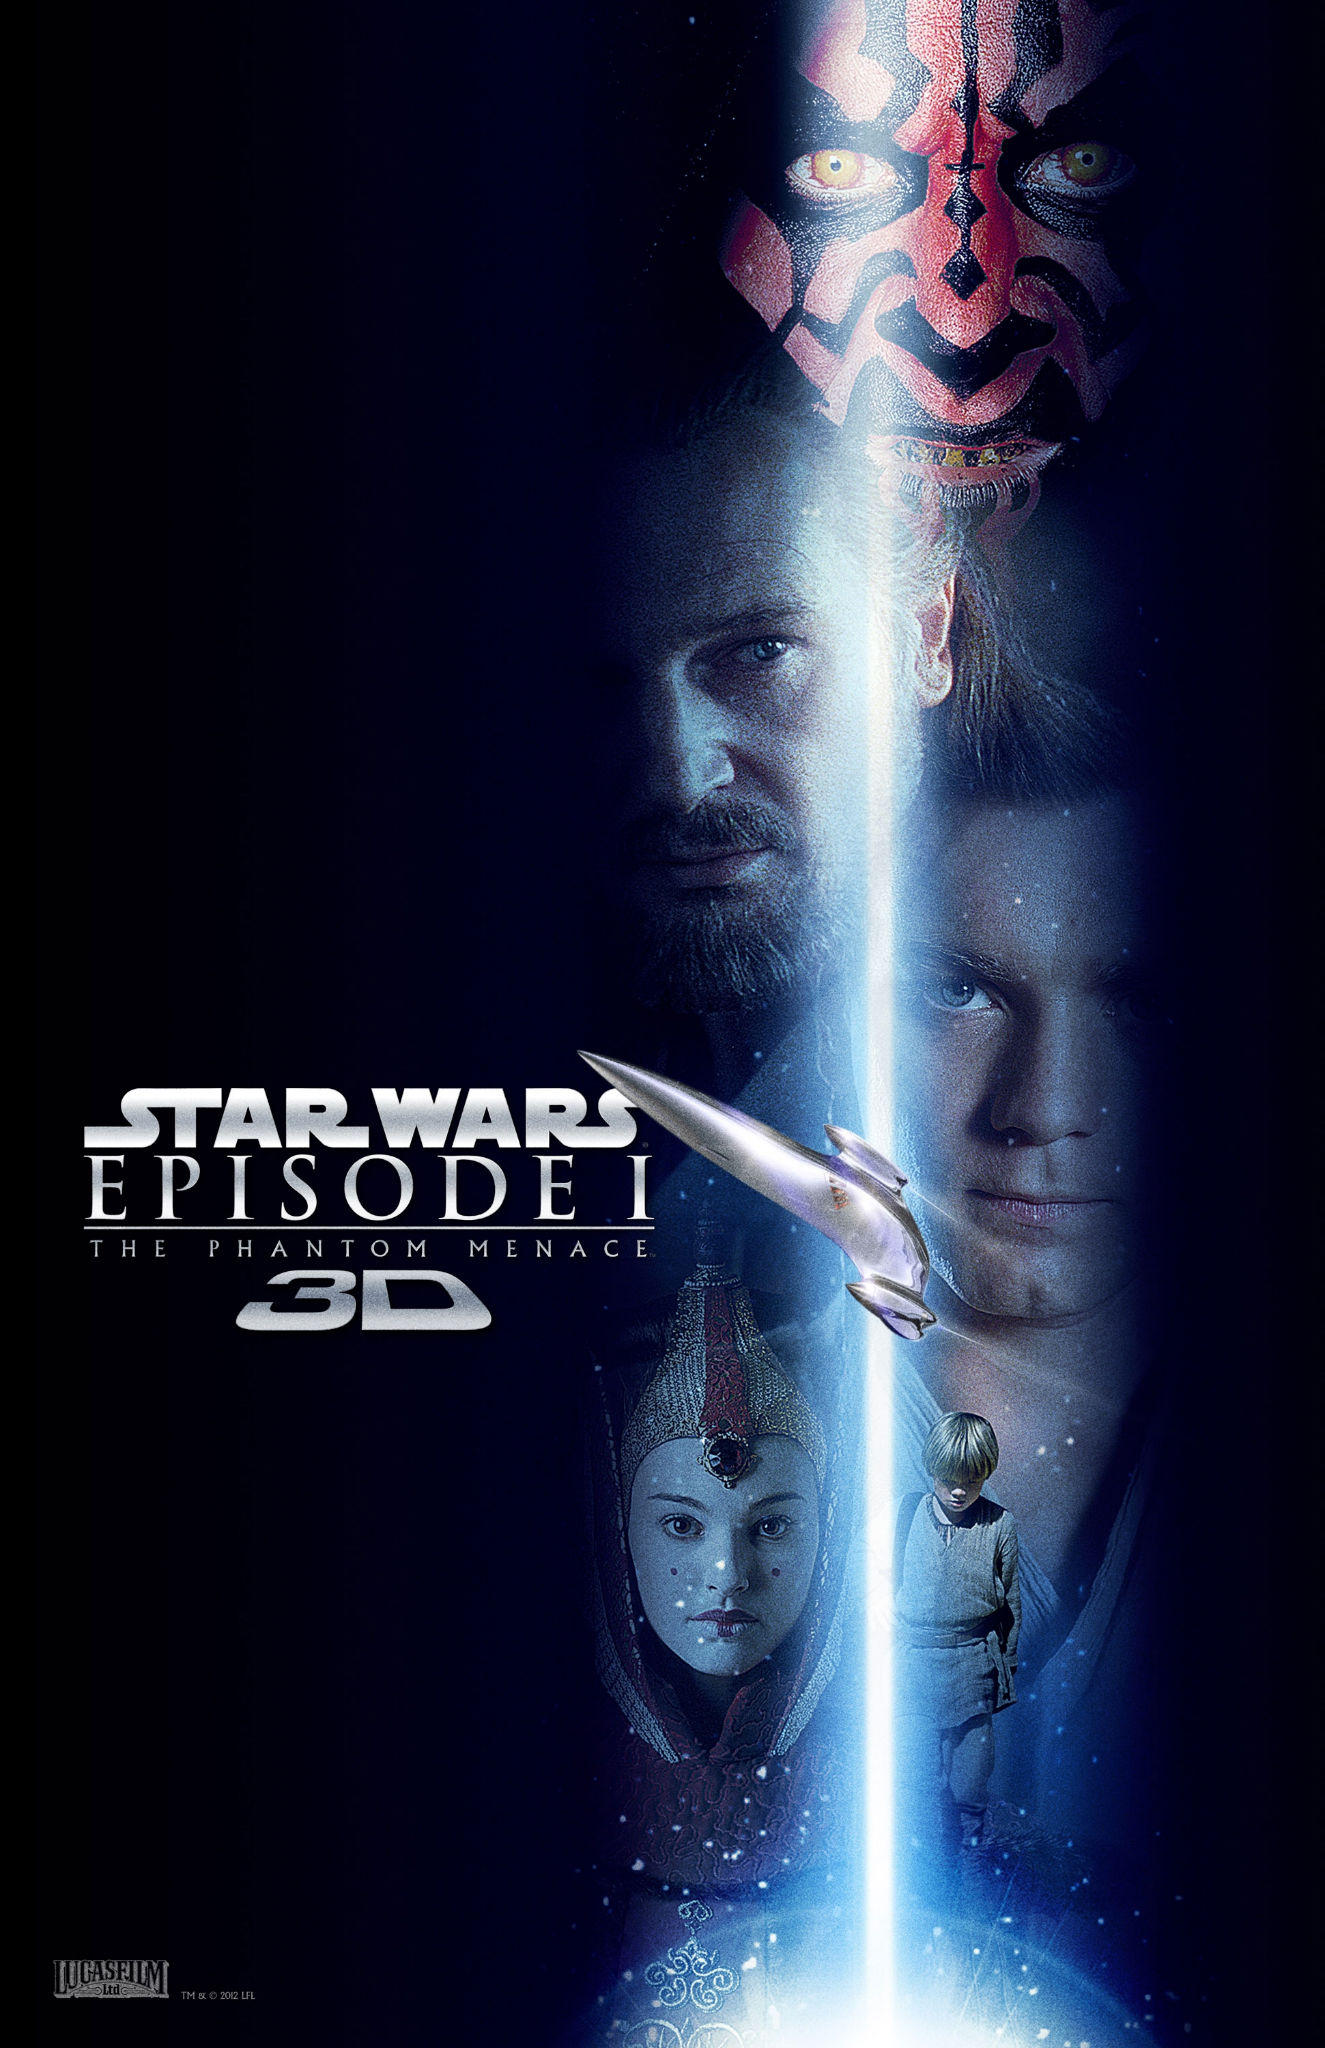 star wars episode i the phantom menace poster 2